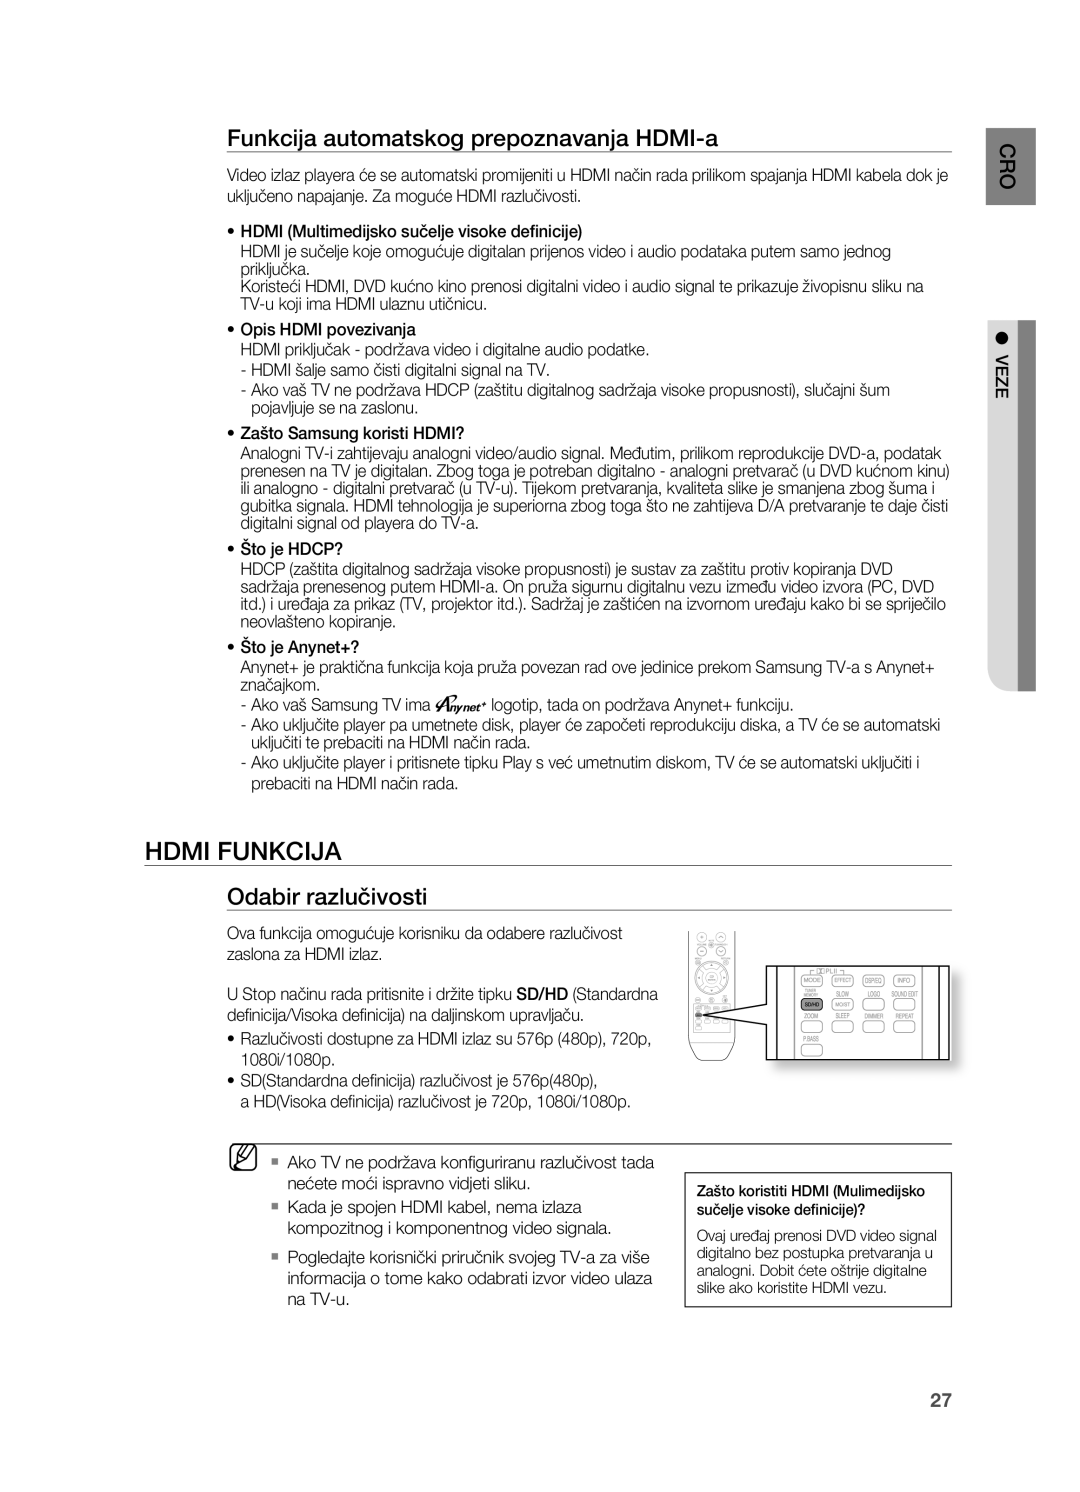 Samsung HT-TZ315R/EDC, HT-TZ212R/EDC manual HDMI FUNkCIjA, Funkcija automatskog prepoznavanja HDMI-a, odabir razlučivosti 